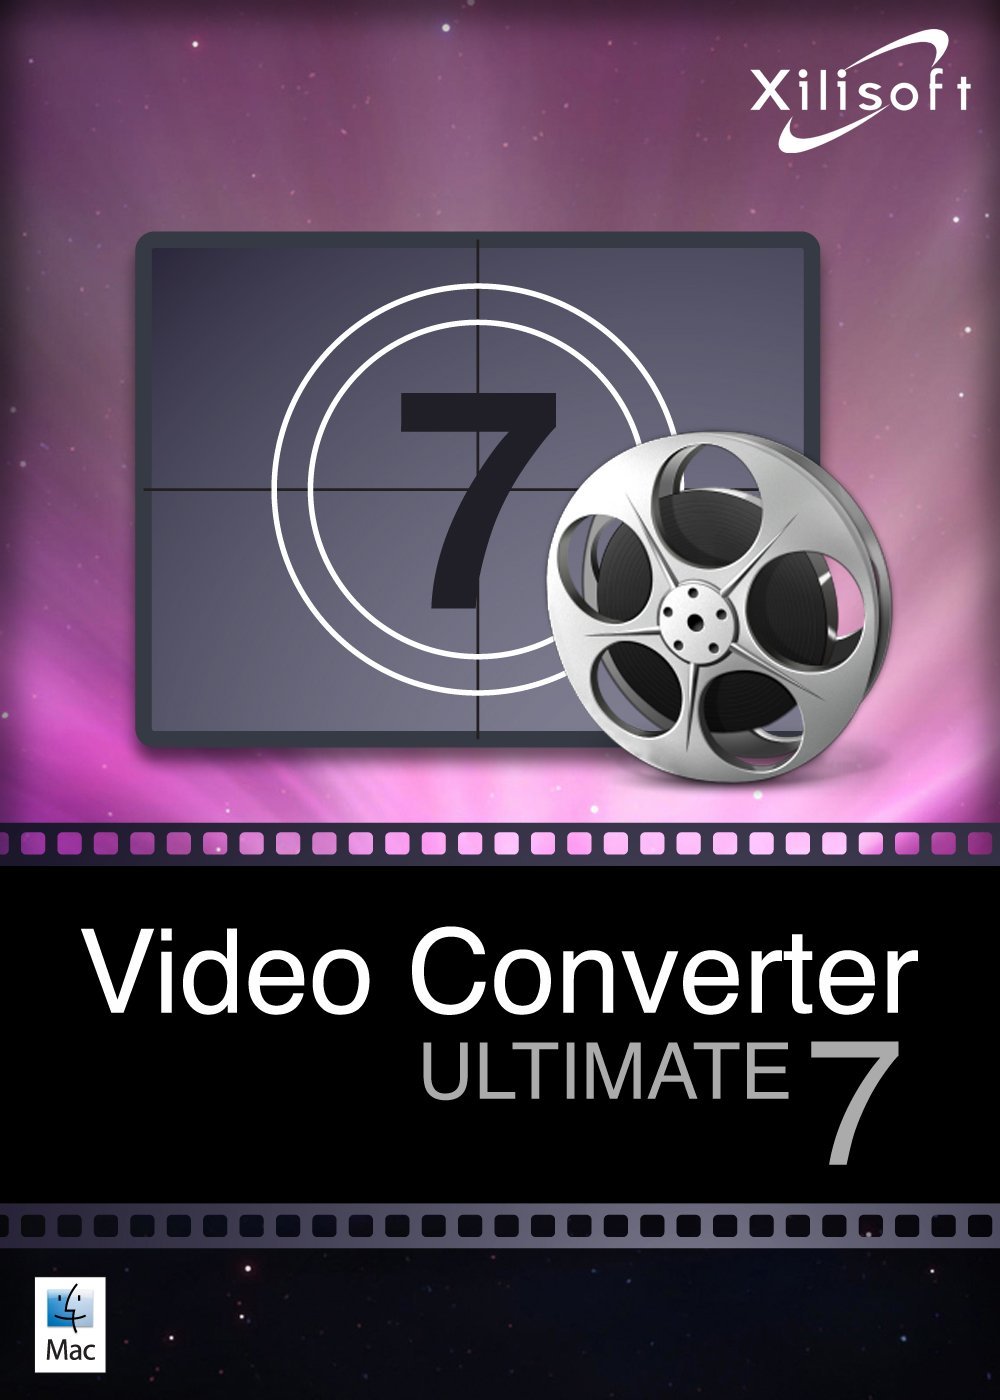 xilisoft video converter ultimate 2021 full